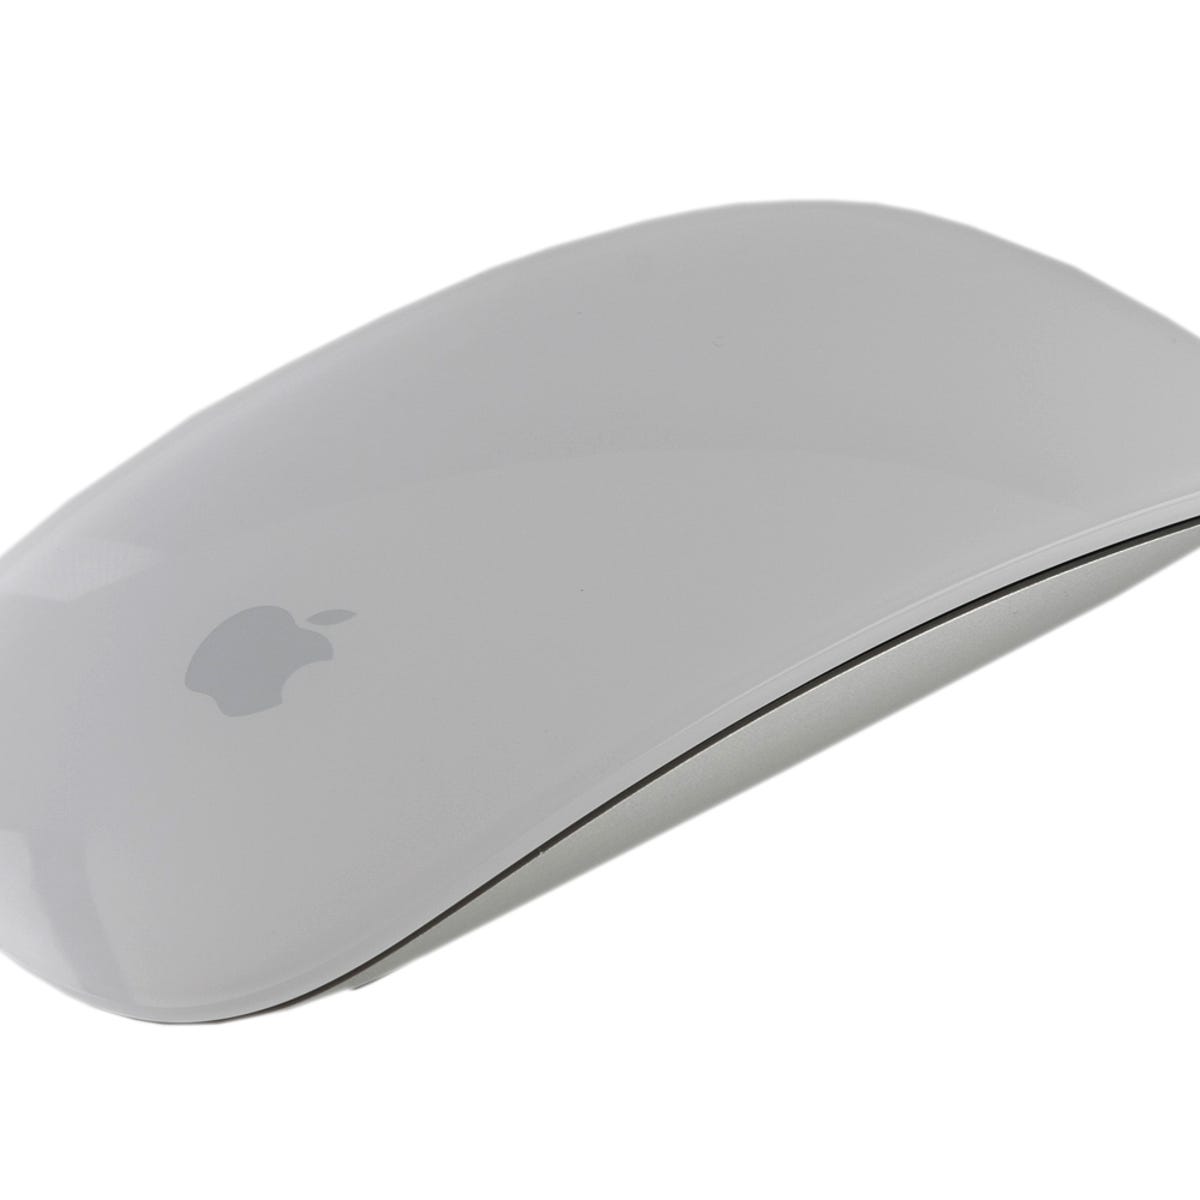 Apple Magic Mouse review: Apple Magic Mouse - CNET